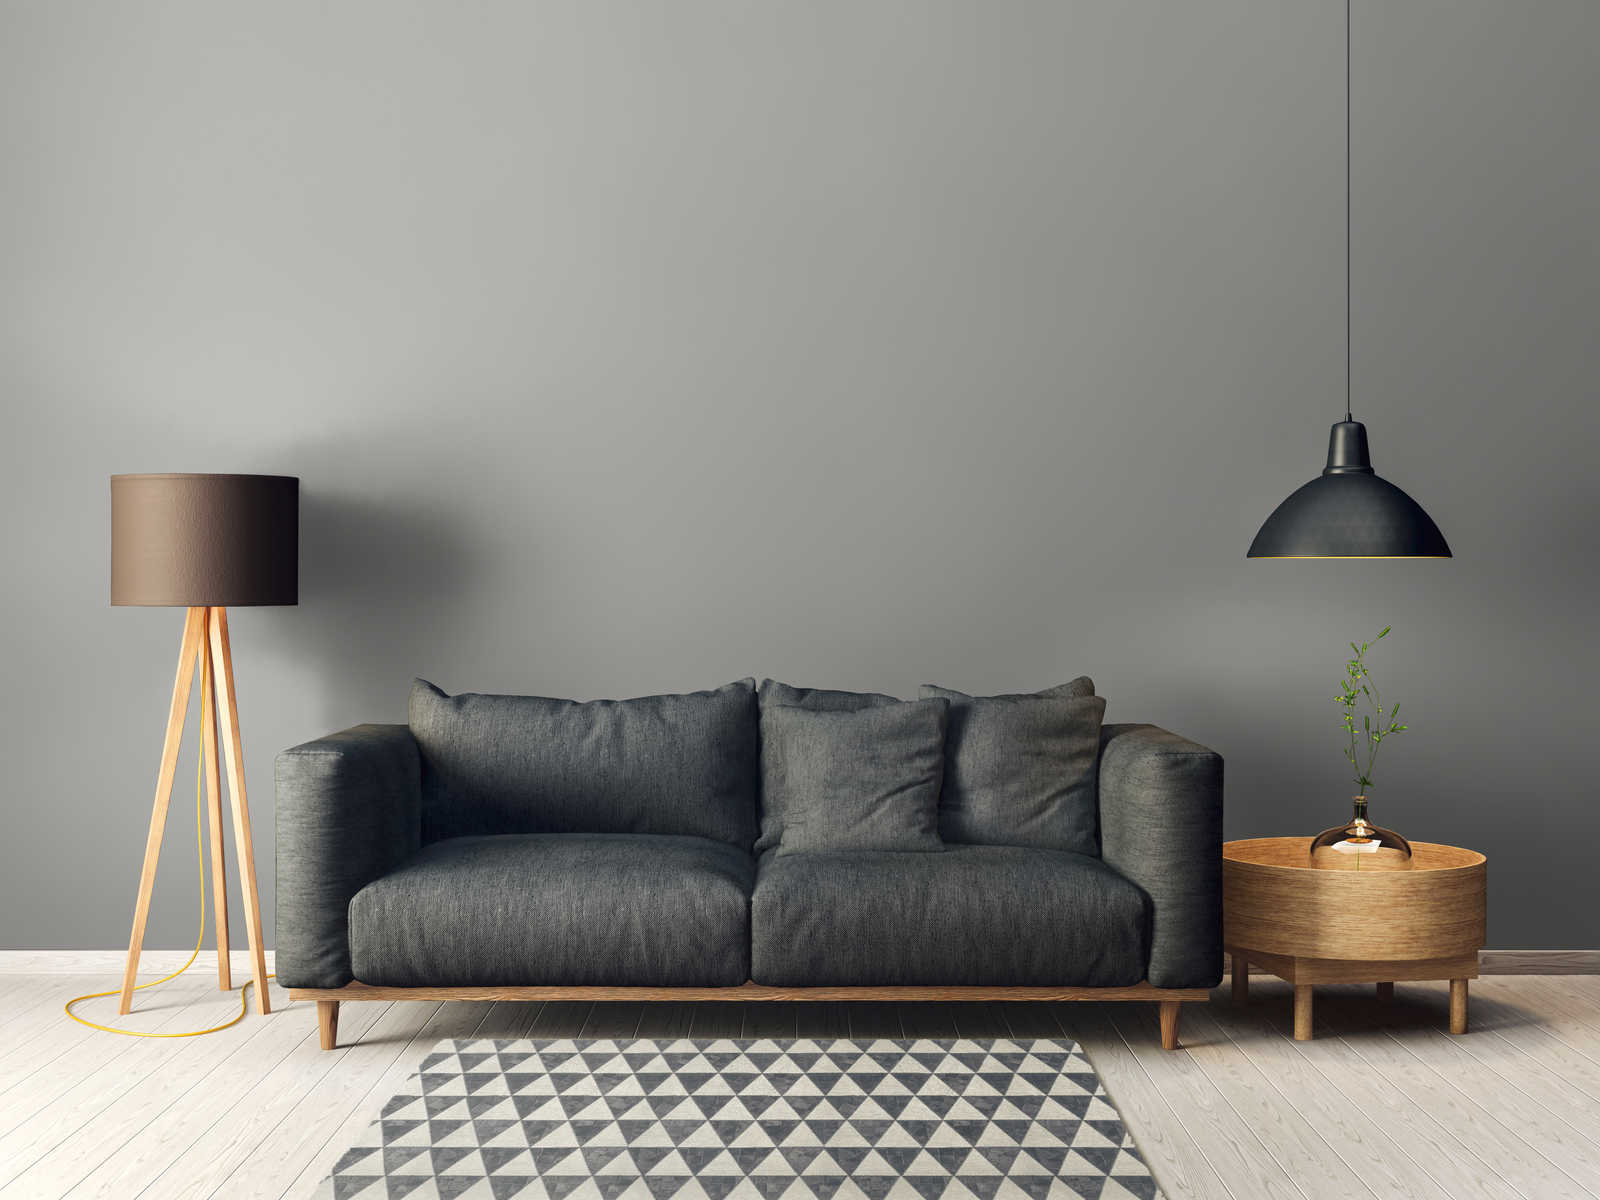             Plain wallpaper grey with matte surface texture
        